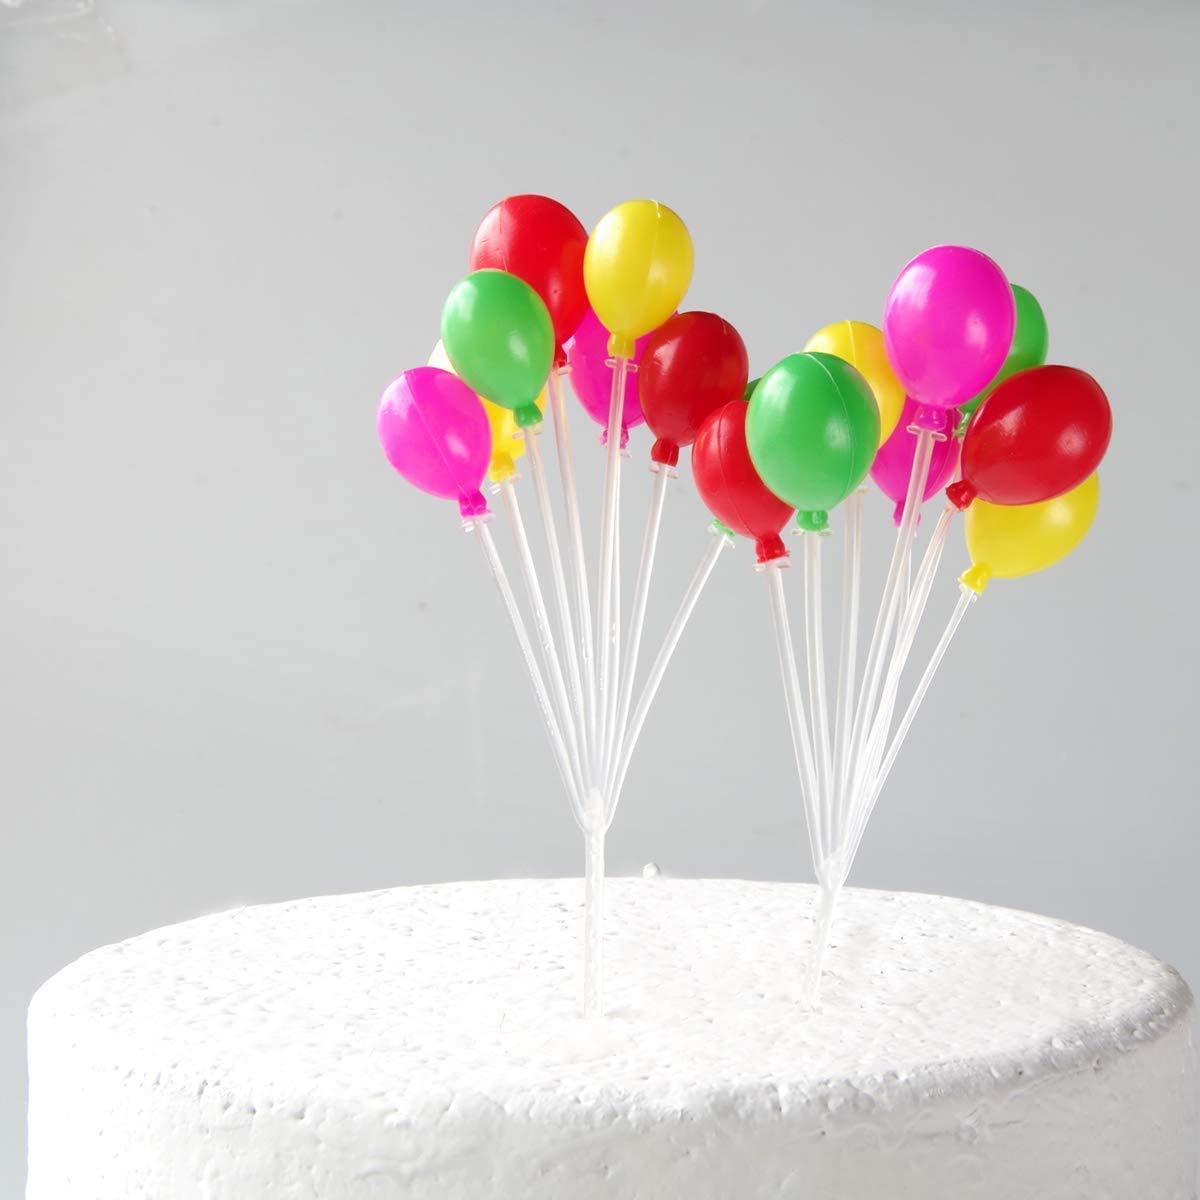 Balloon Girl cake idea | Birthday cake idea for girls - YouTube